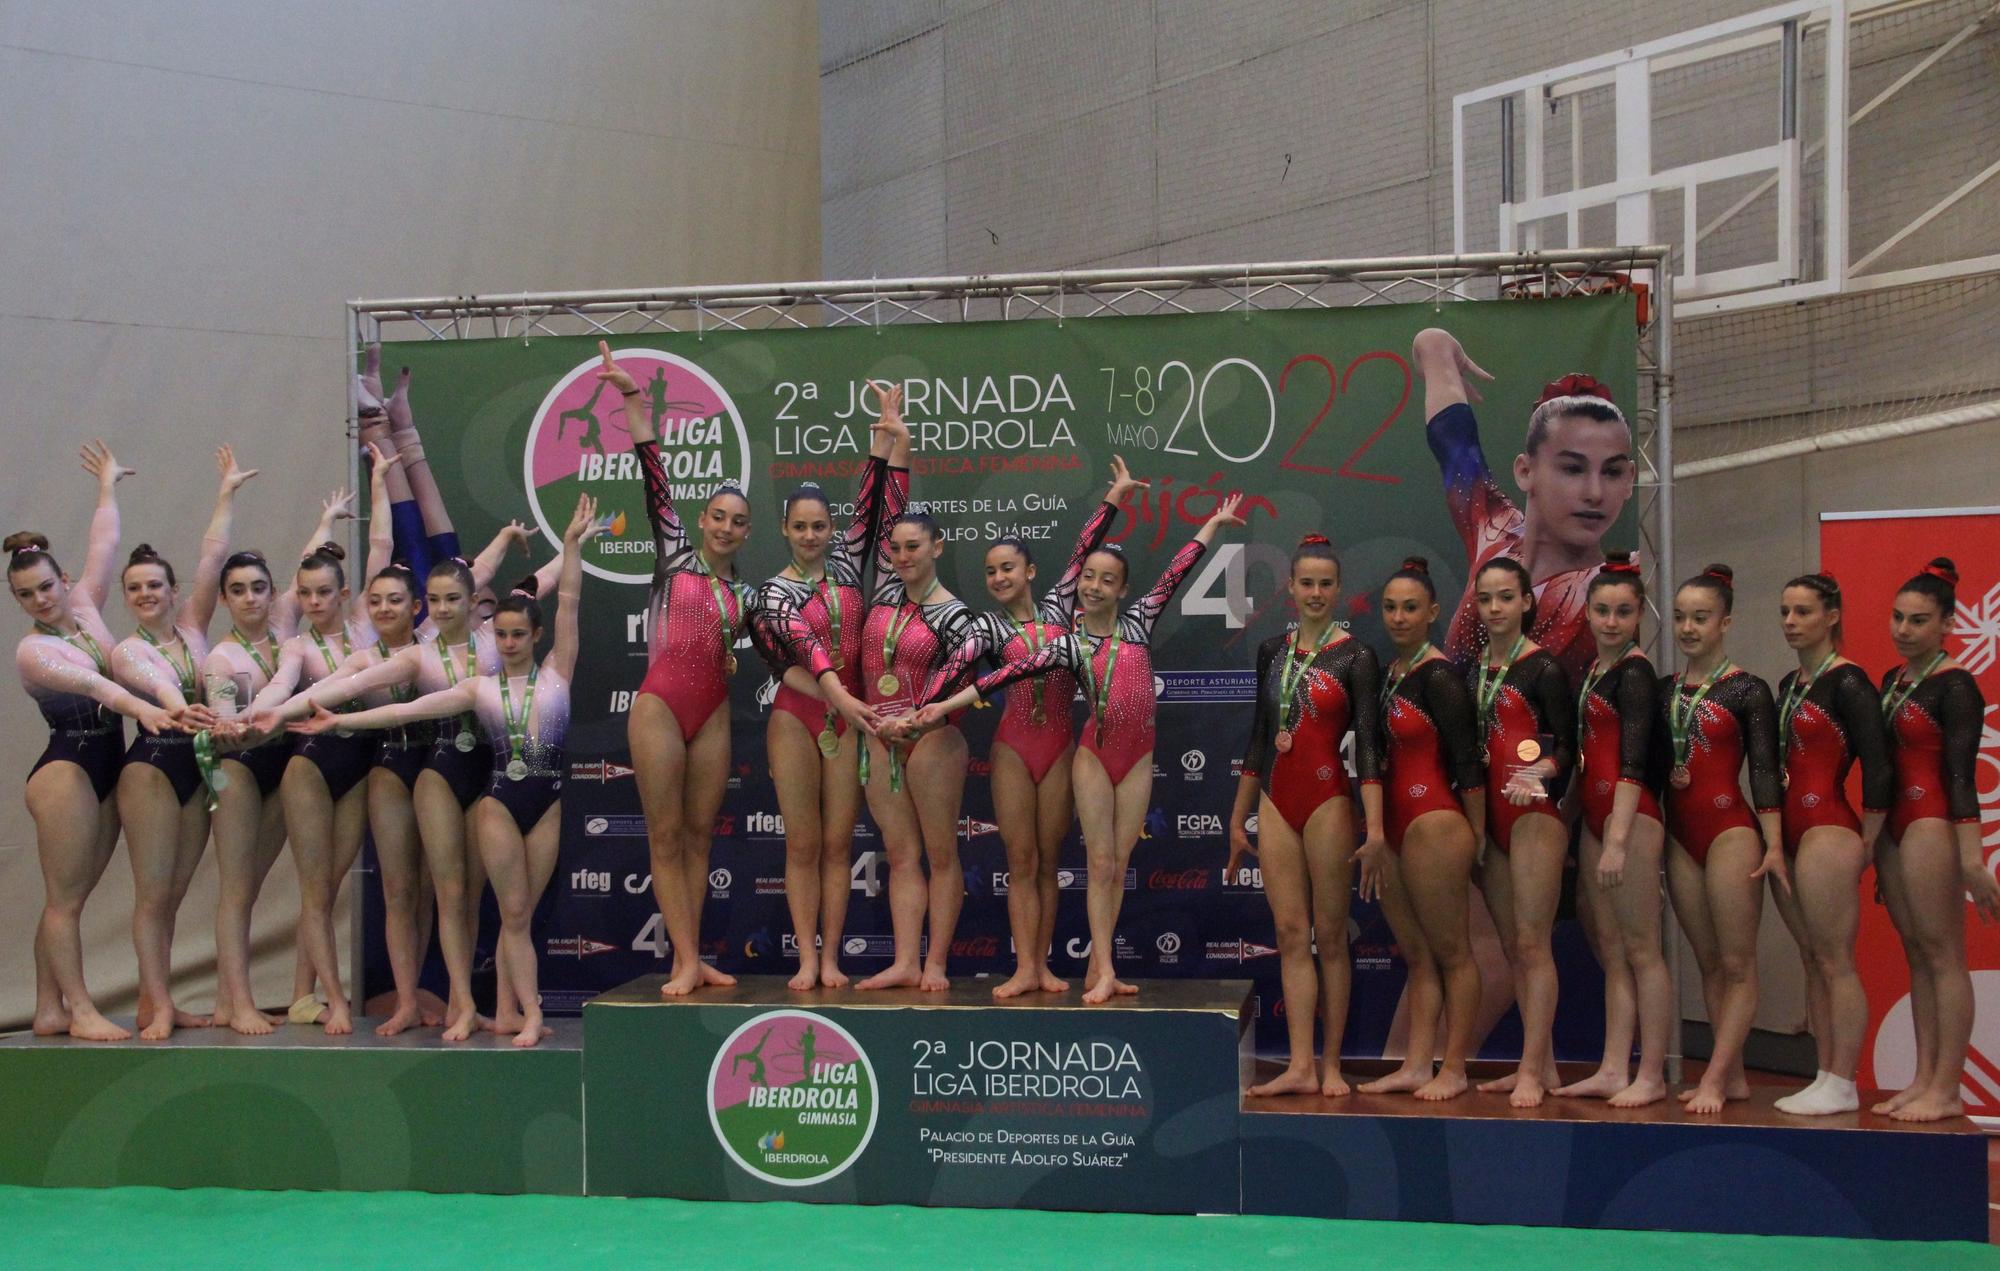 Segunda fase de la Liga Iberdrola de gimnasia artística en Gijón